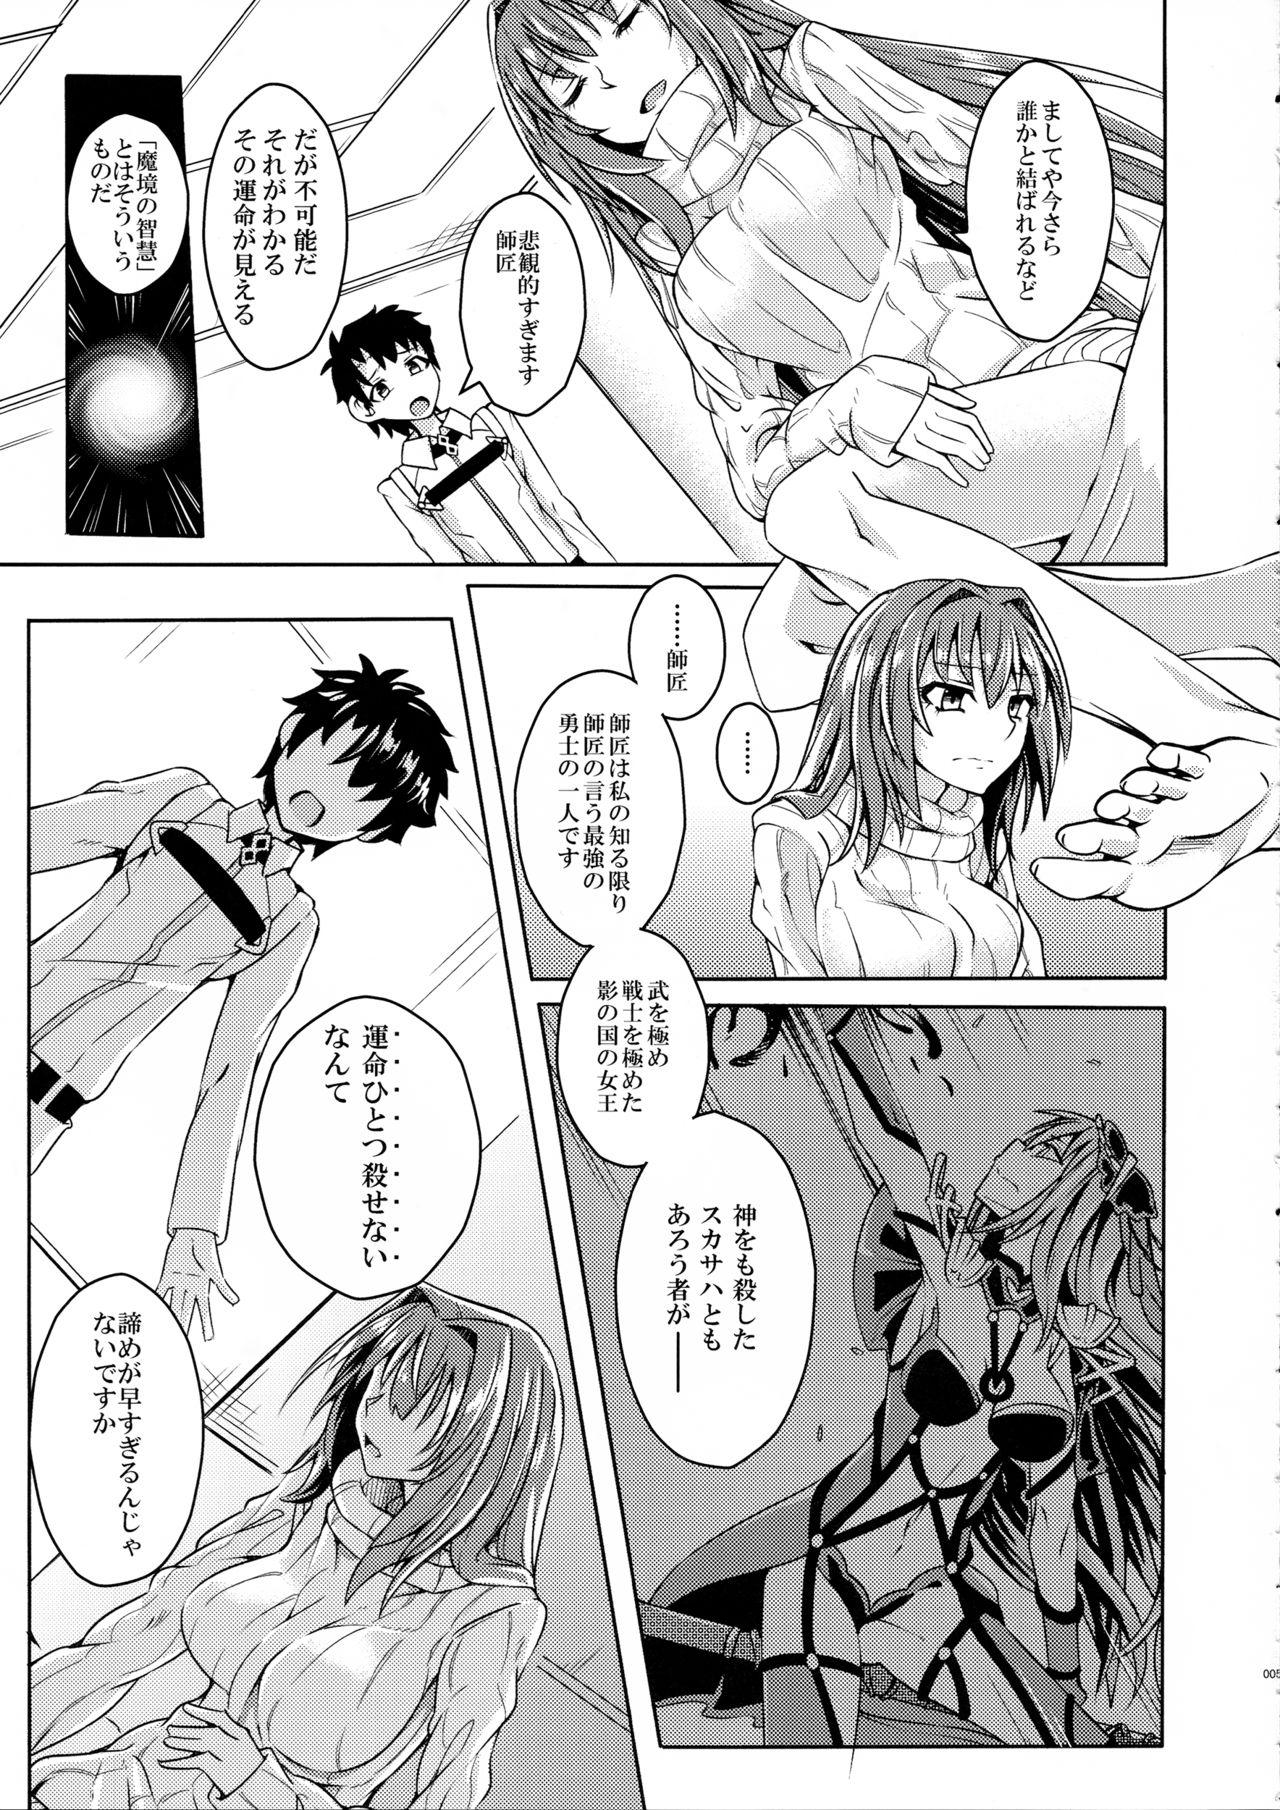 Tats Makuai no Ura Monogatari Kan - Fate grand order Blacks - Page 4